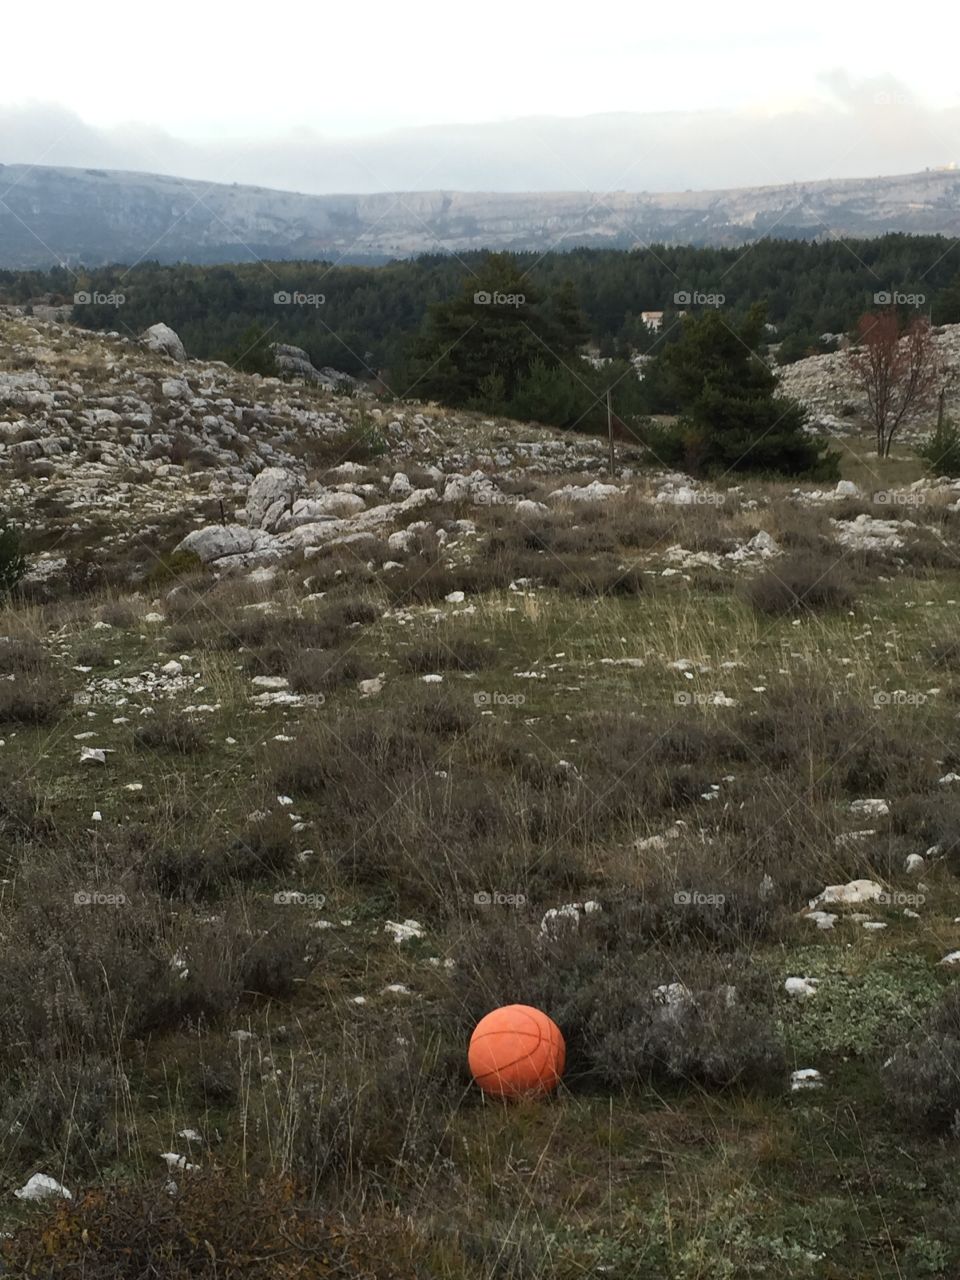 Basket ball in mountain